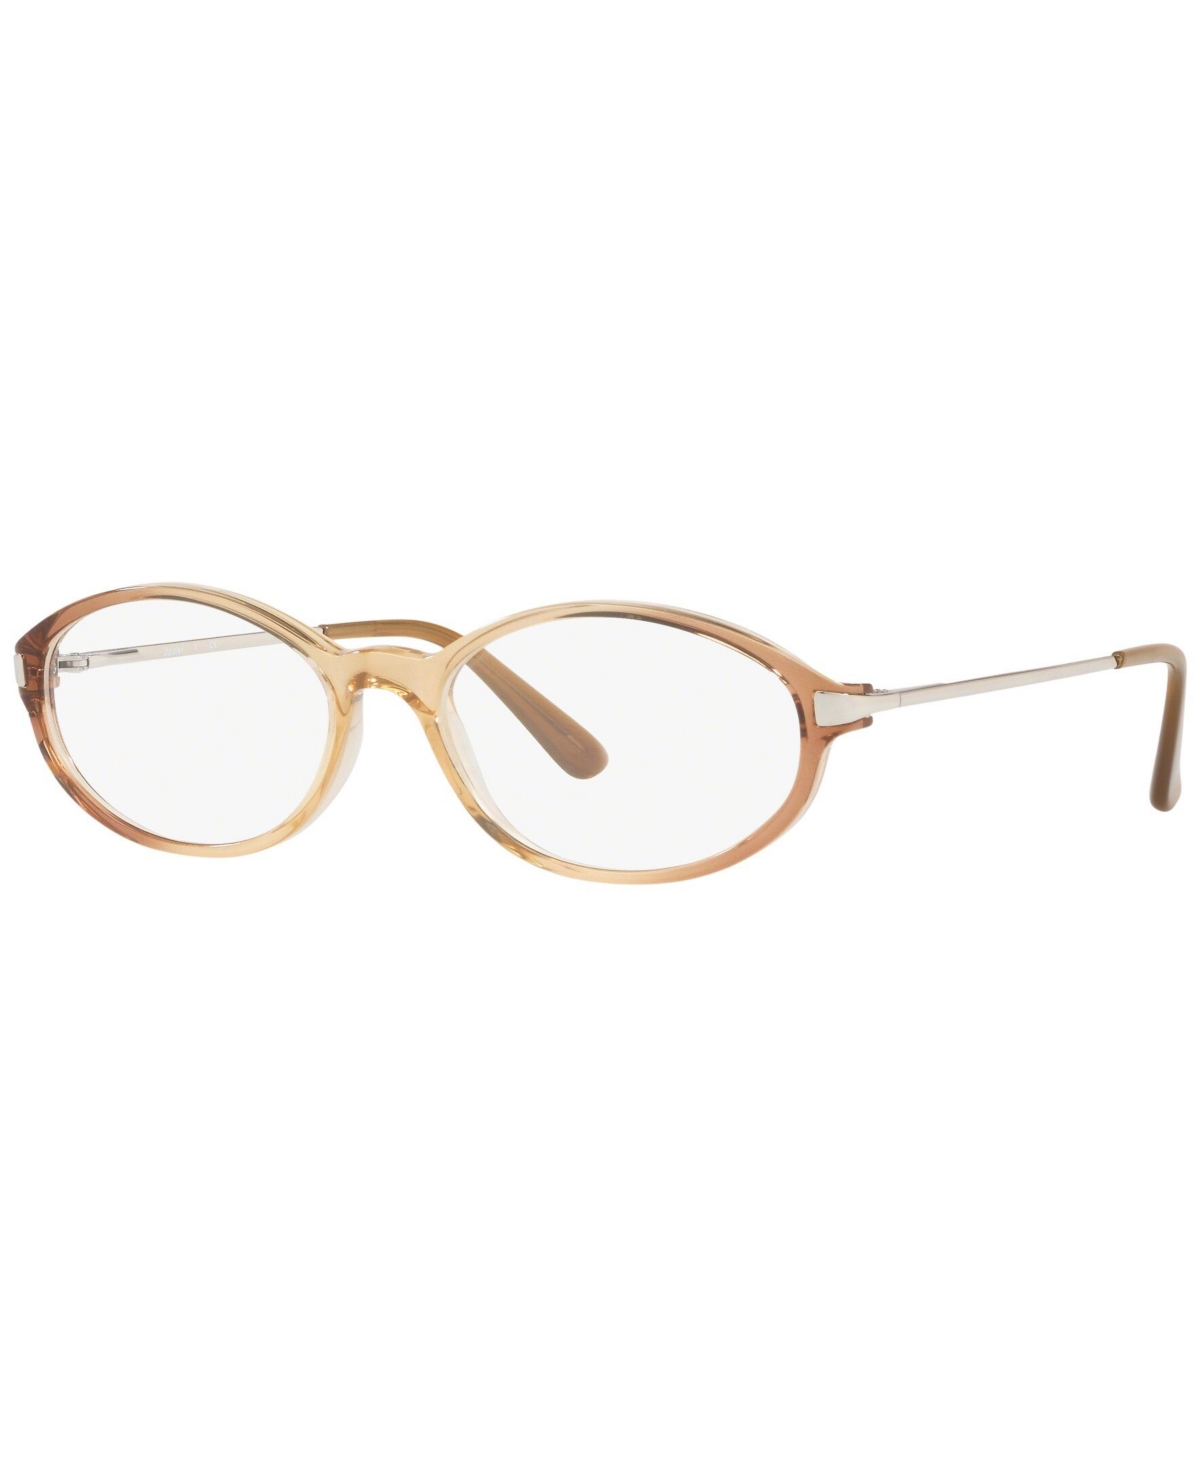 SF1574 Women's Oval Eyeglasses - Grad Brown